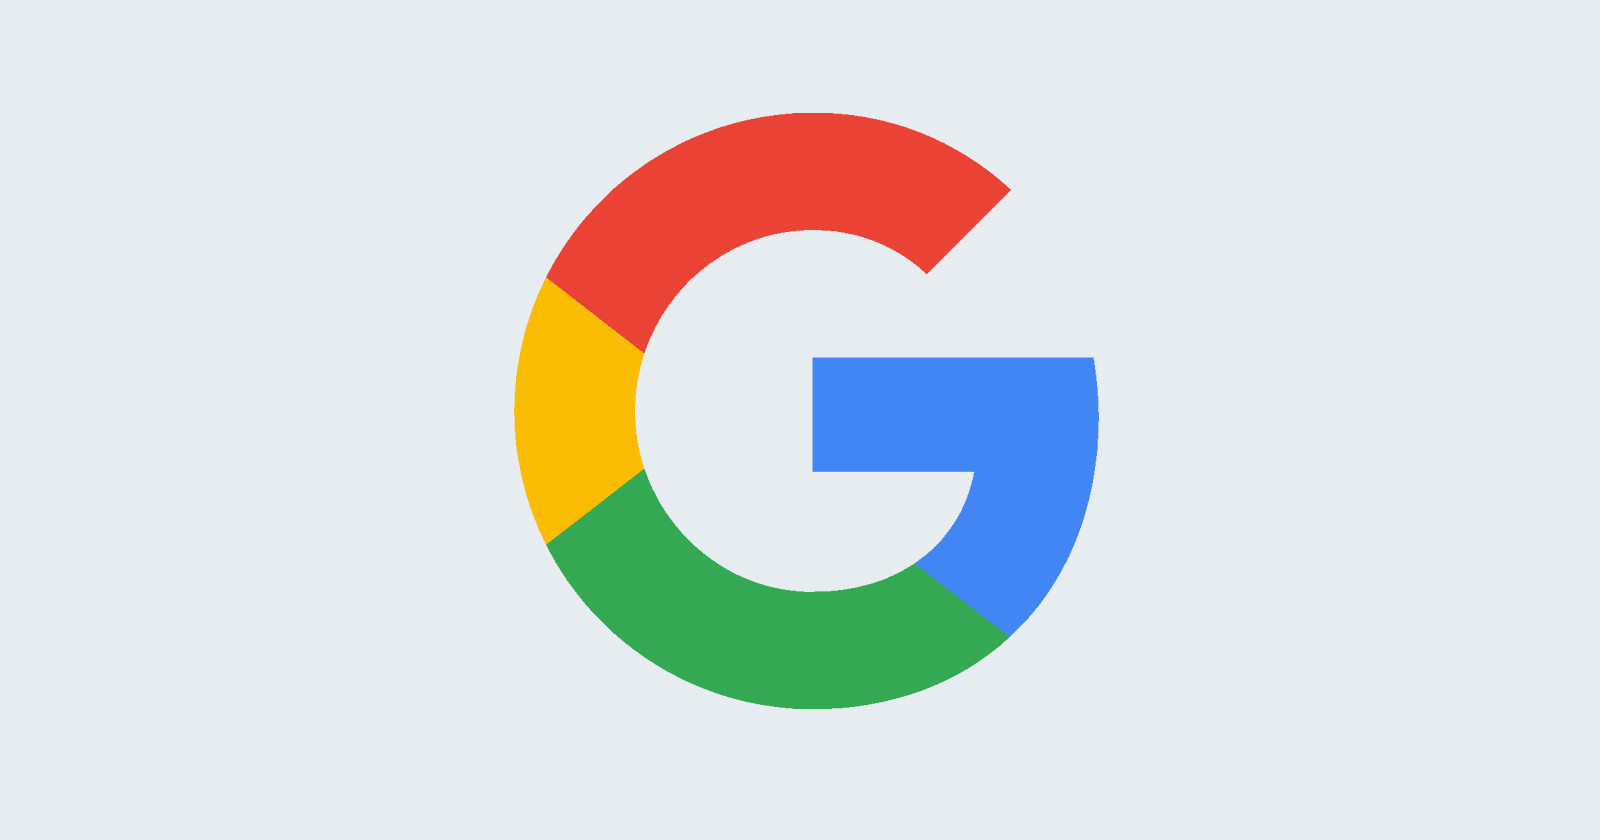 image of Google's logo